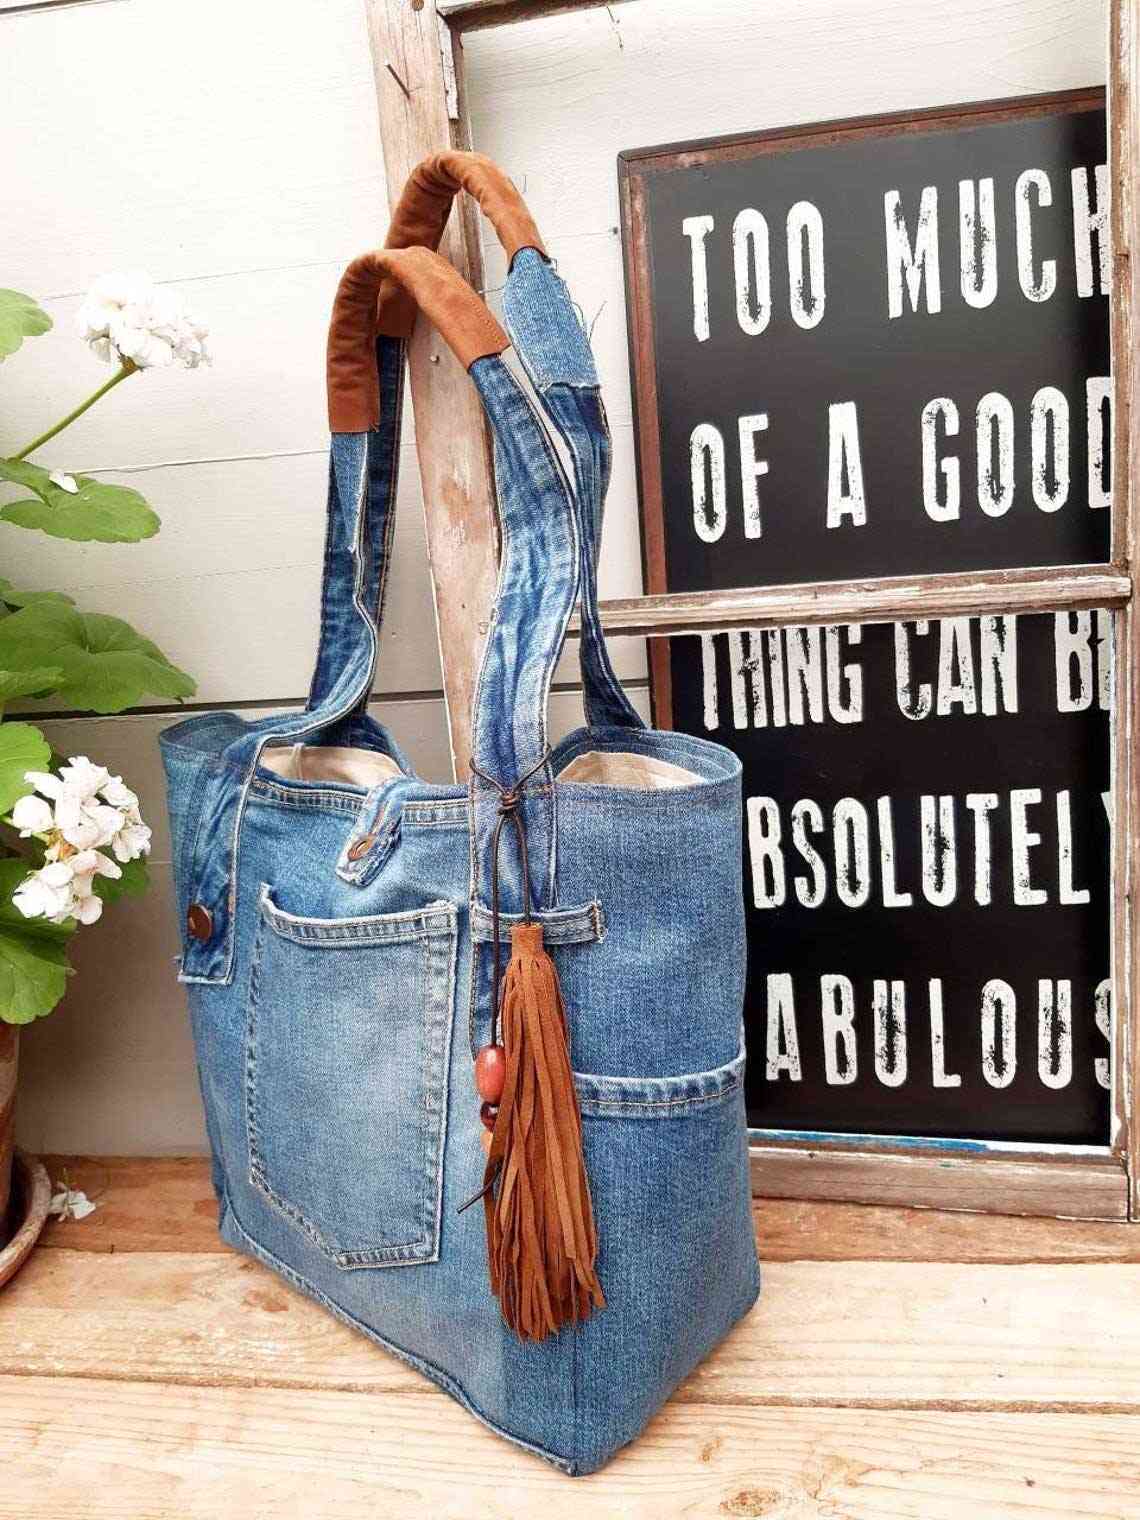 Cool denim bag made of old jeans